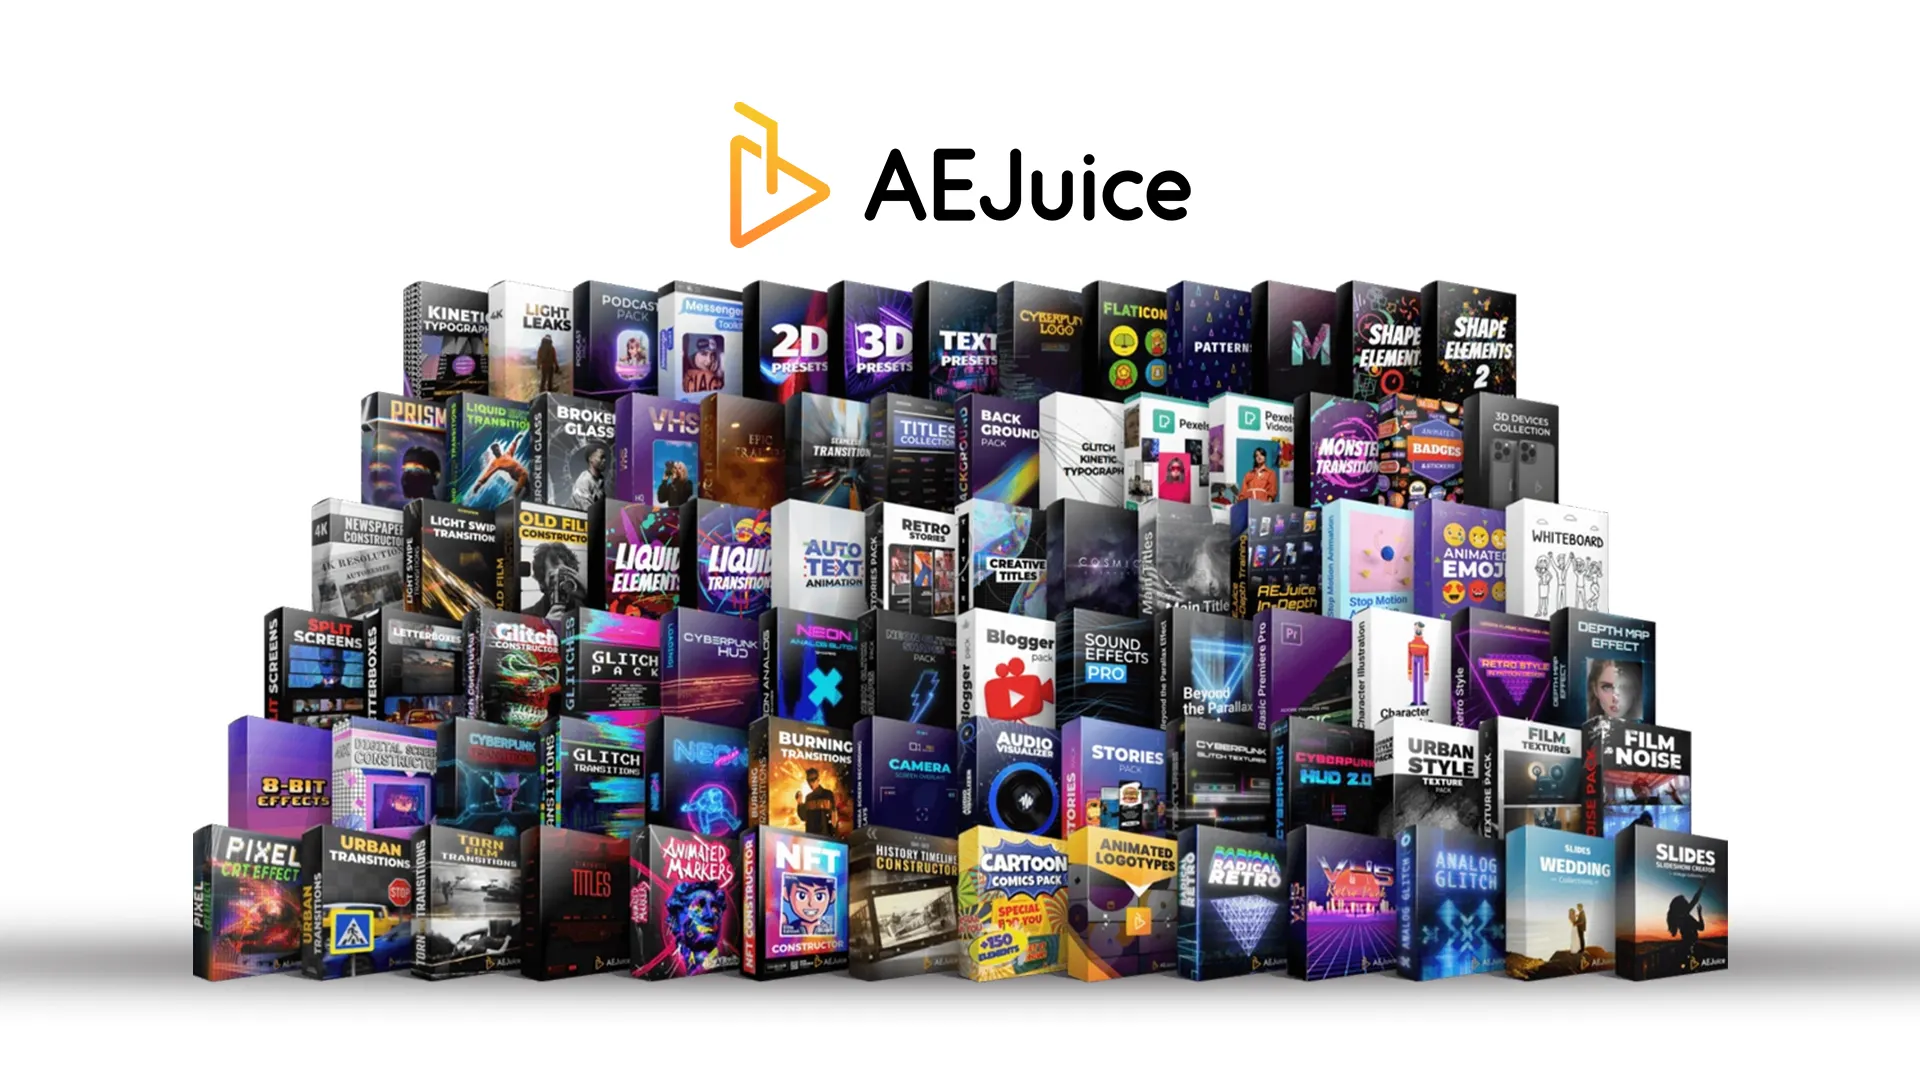 AEJuice Video Editing Plugin Review